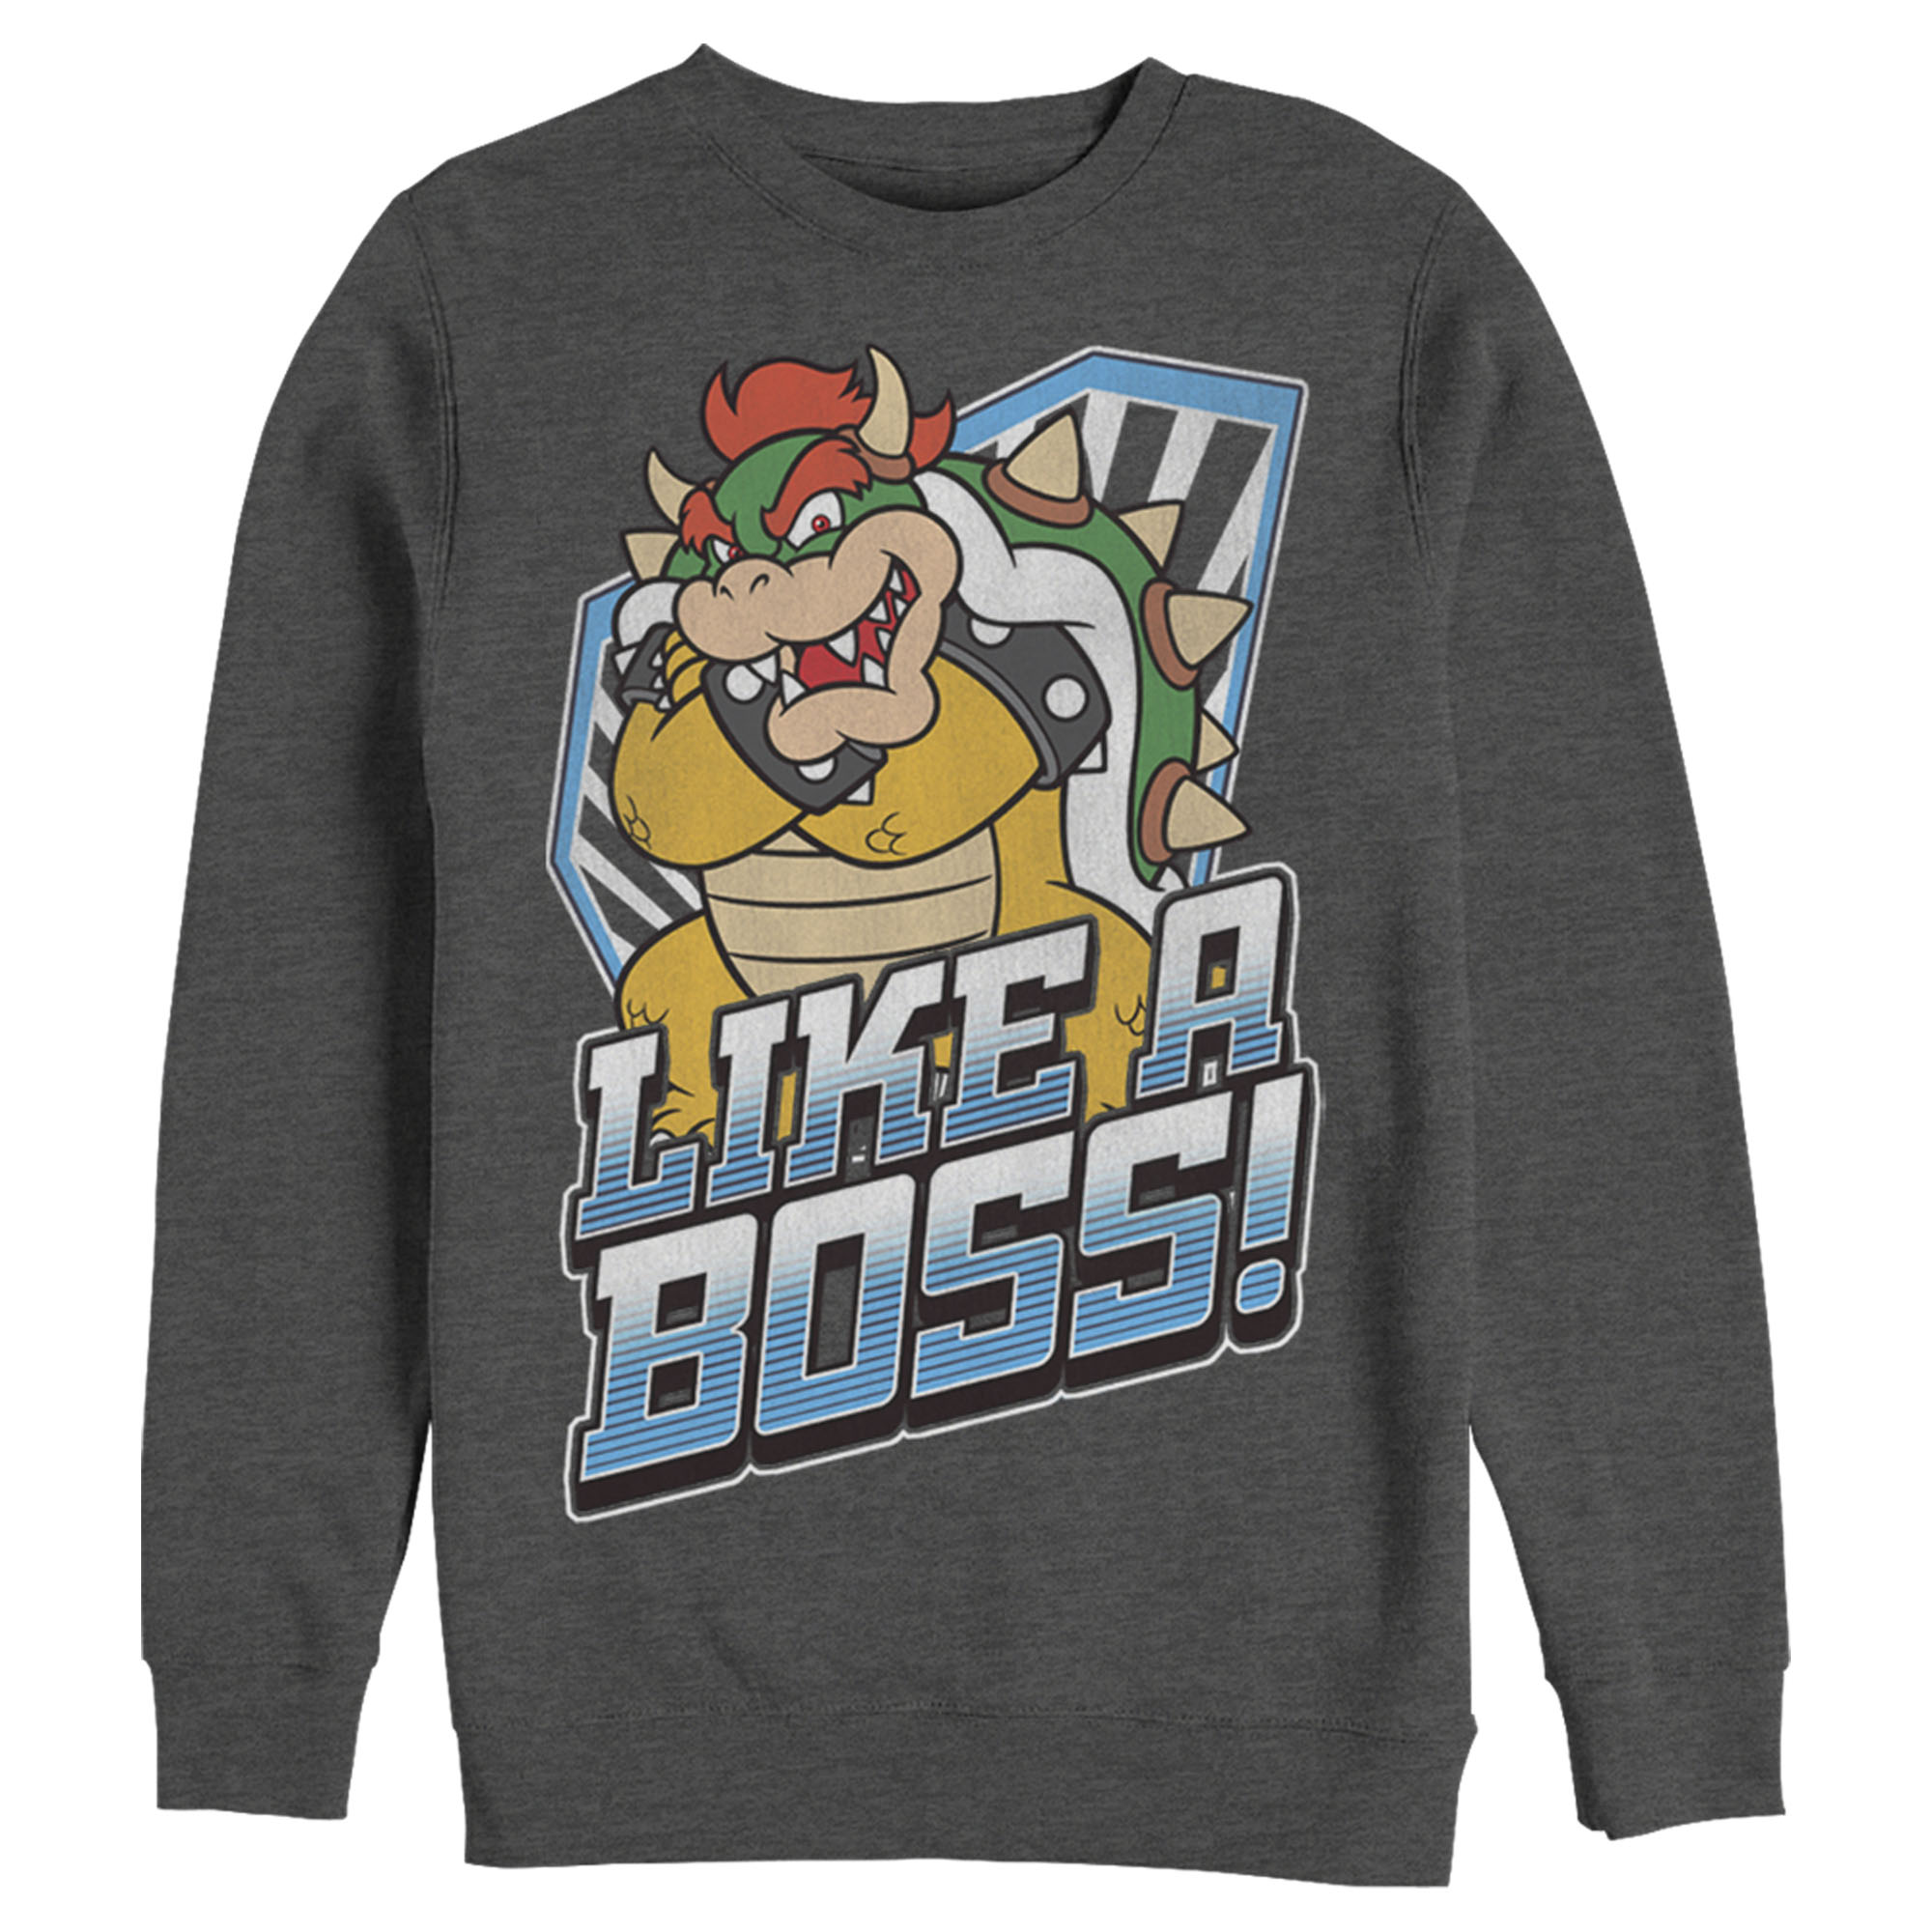 Men's Nintendo Bowser Like a Boss  Sweatshirt Charcoal Heather Medium - image 1 of 3